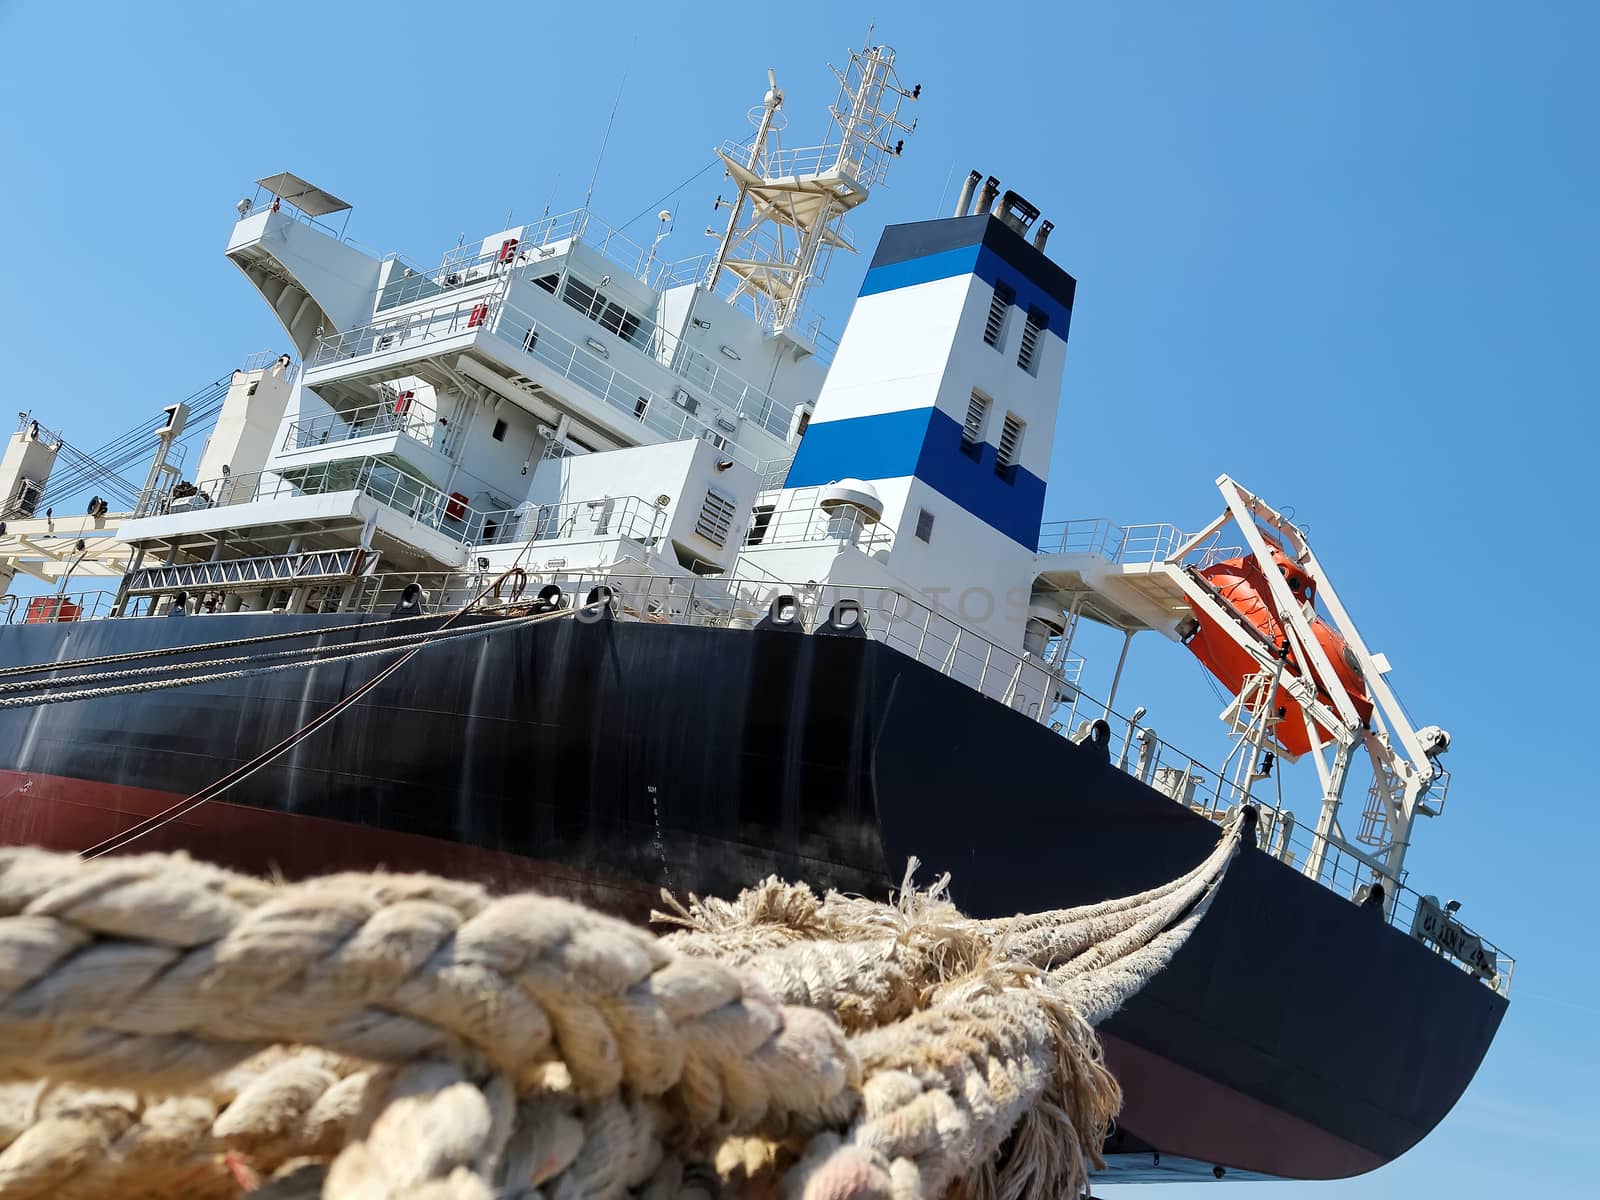 cargo ship docked in port